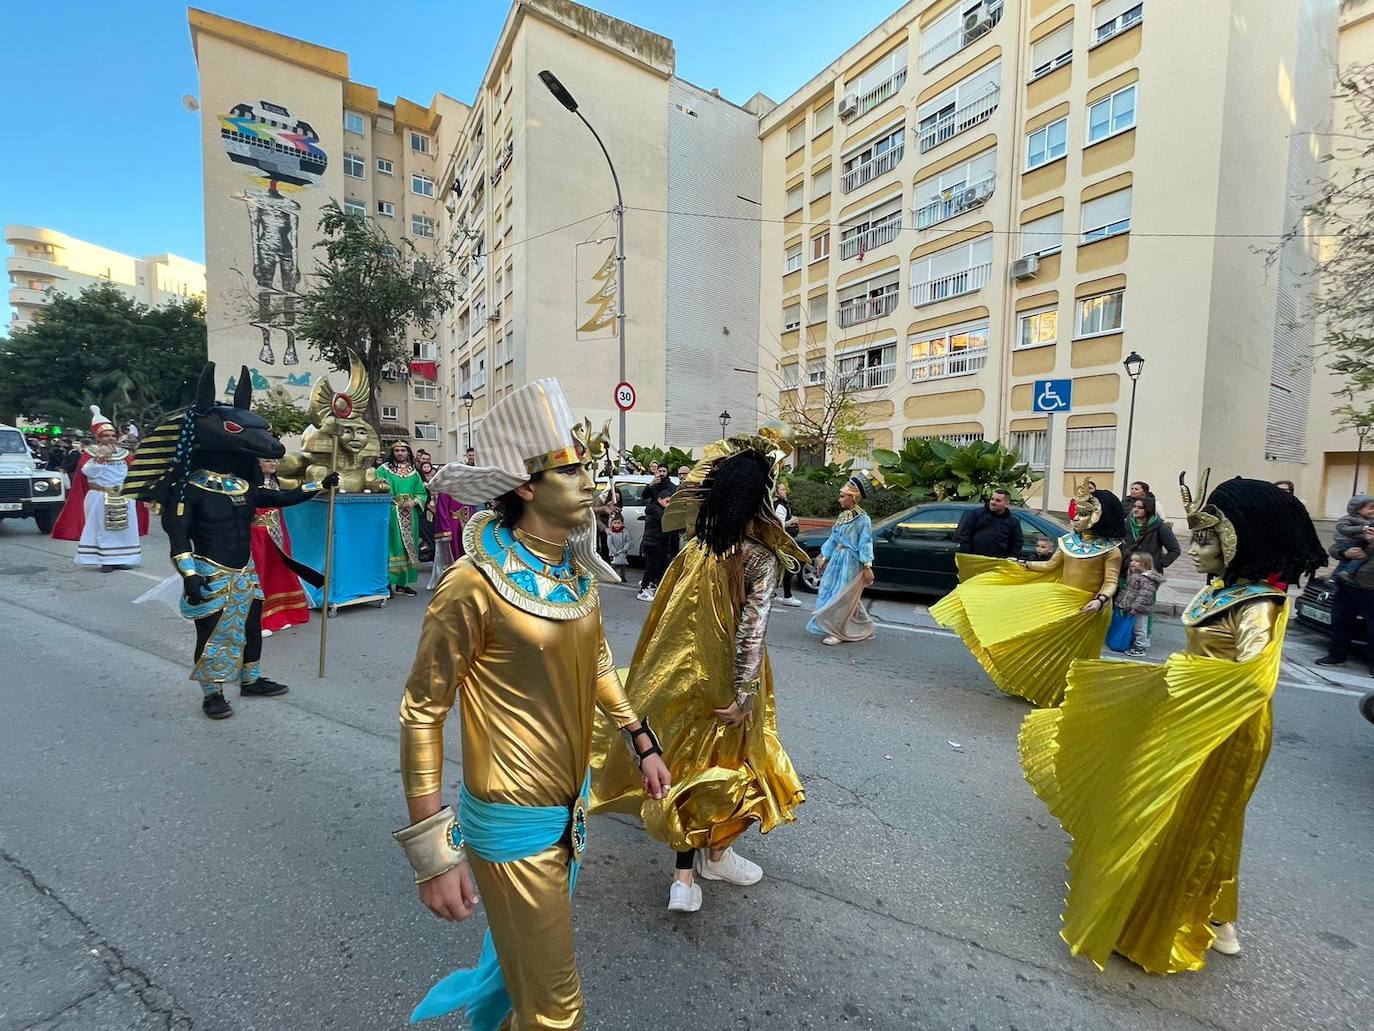 The Three Kings parade in Estepona.